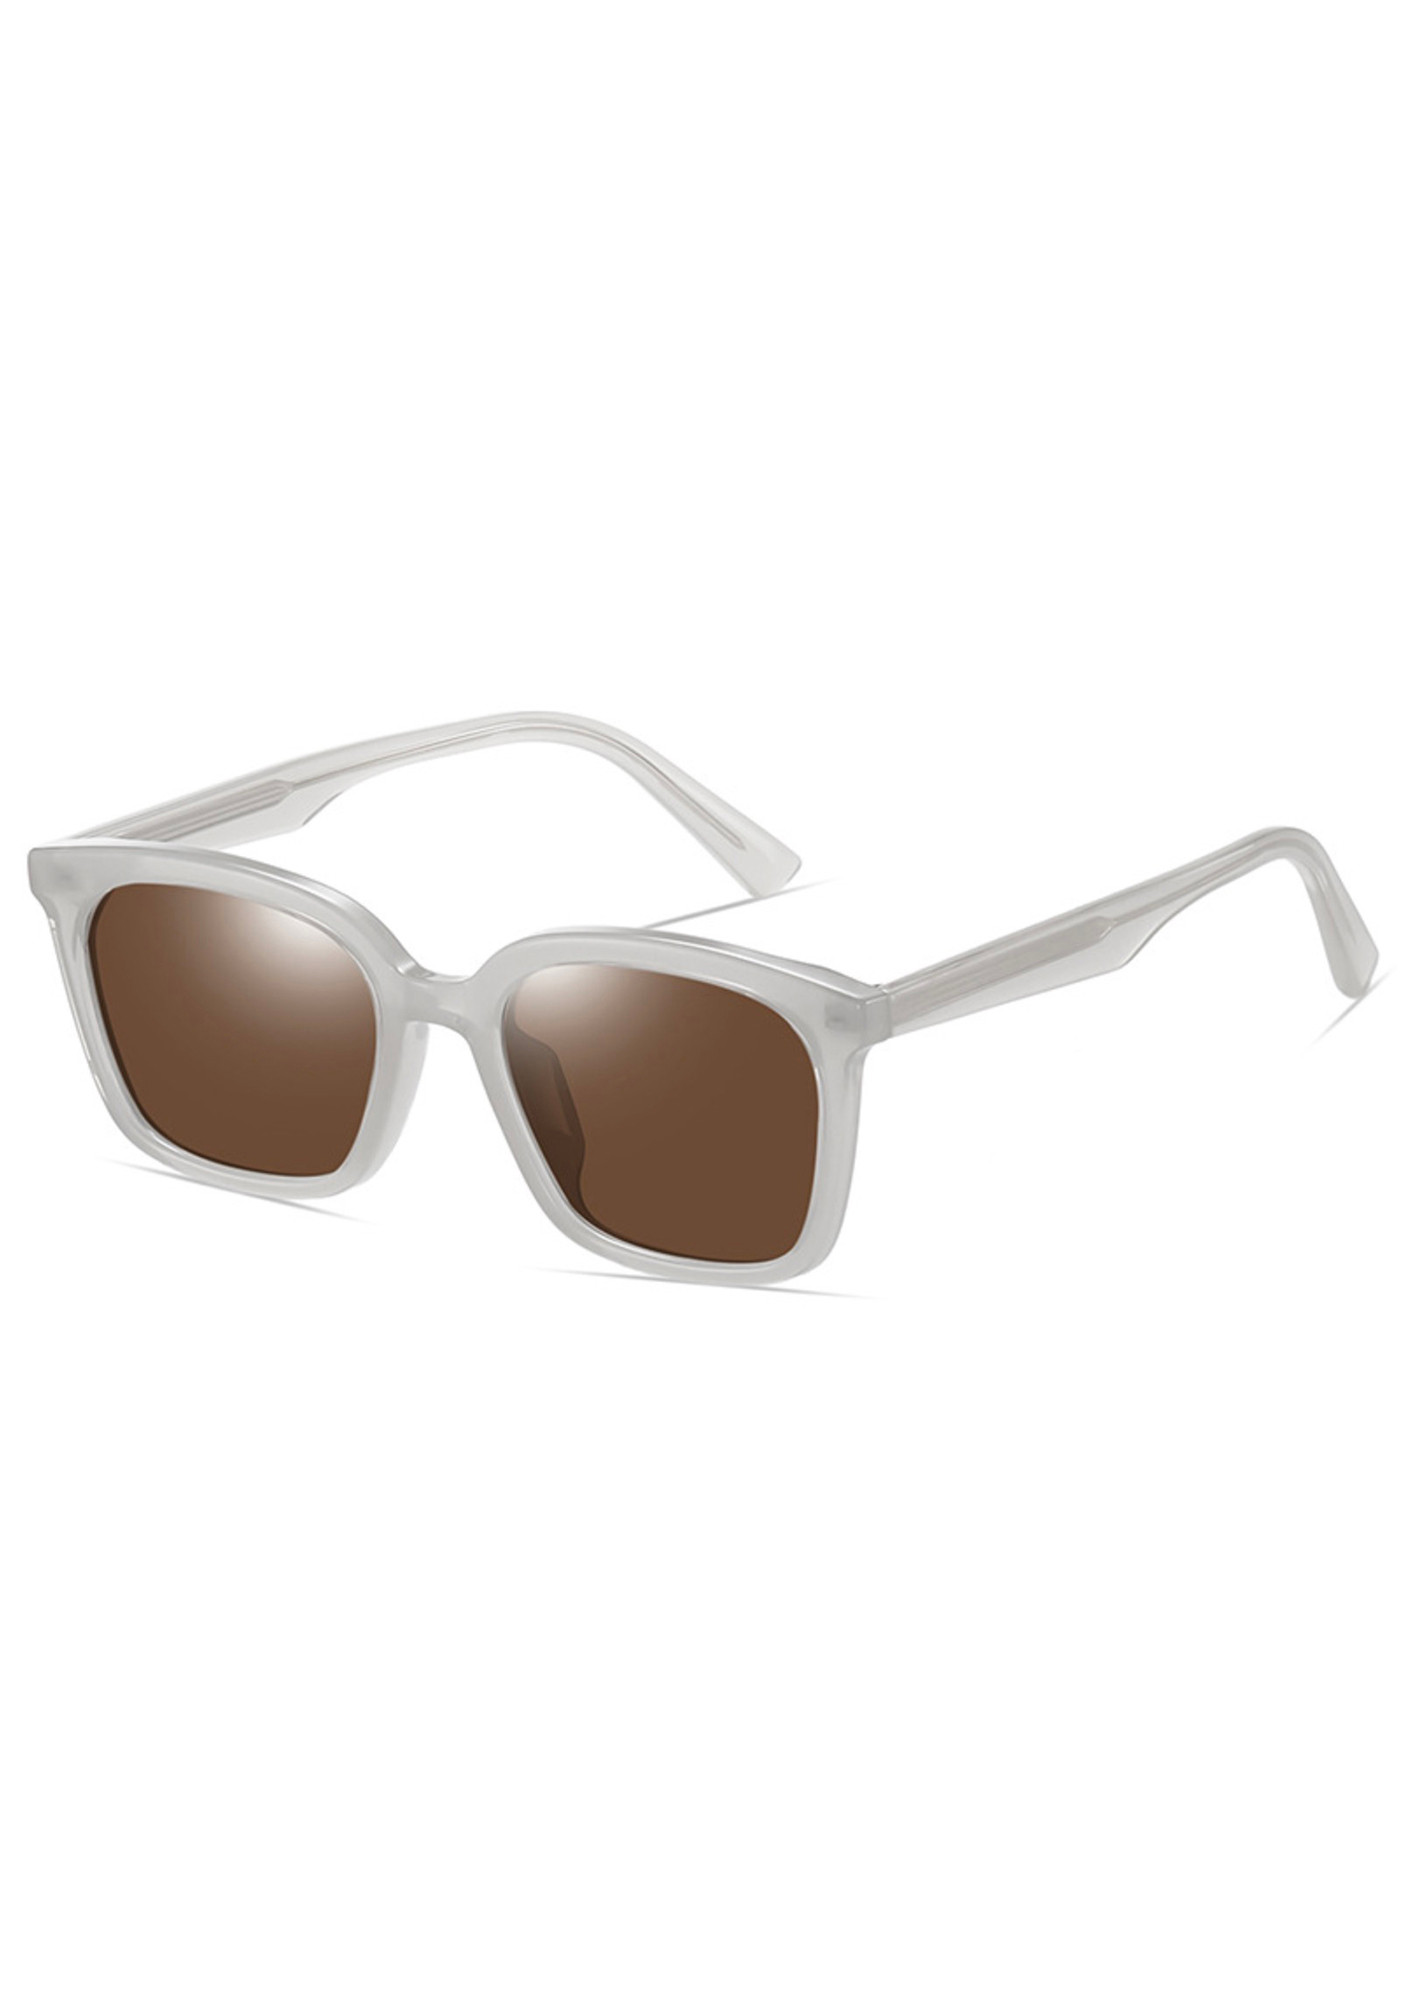 Buy White Sunglasses for Men by Spiky Online | Ajio.com